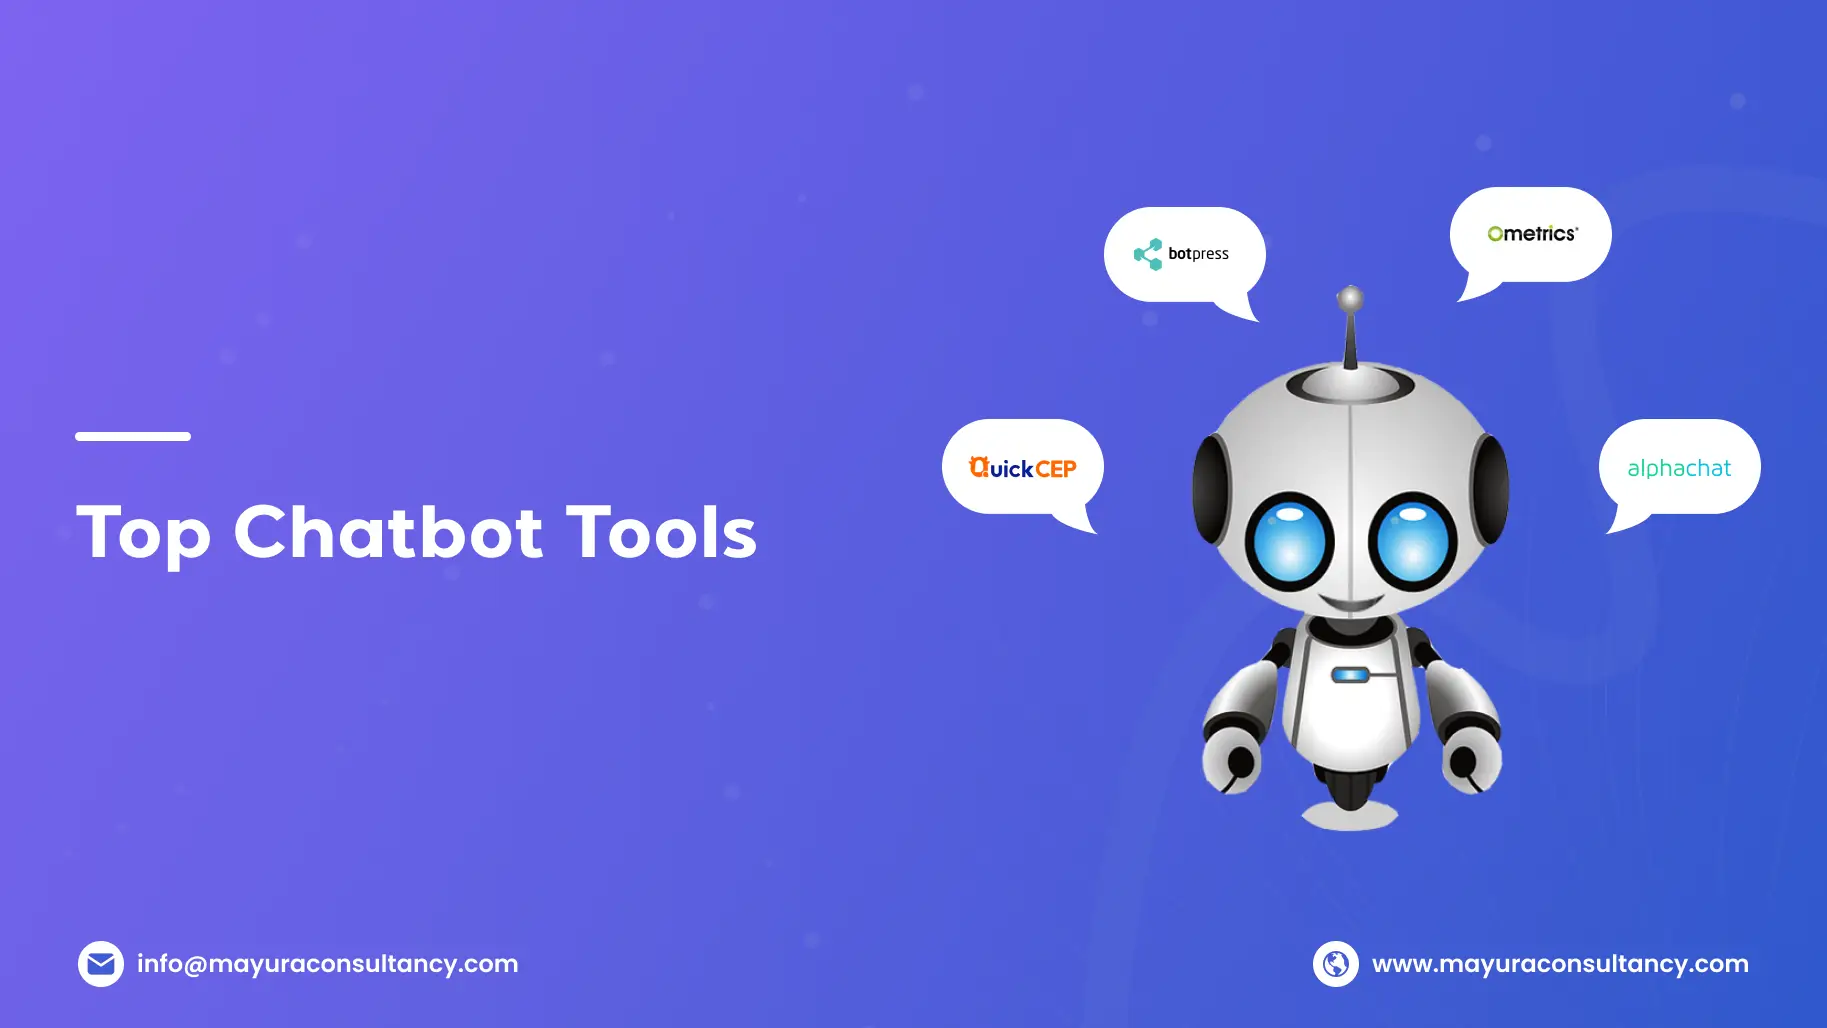 Top Chatbot Tools